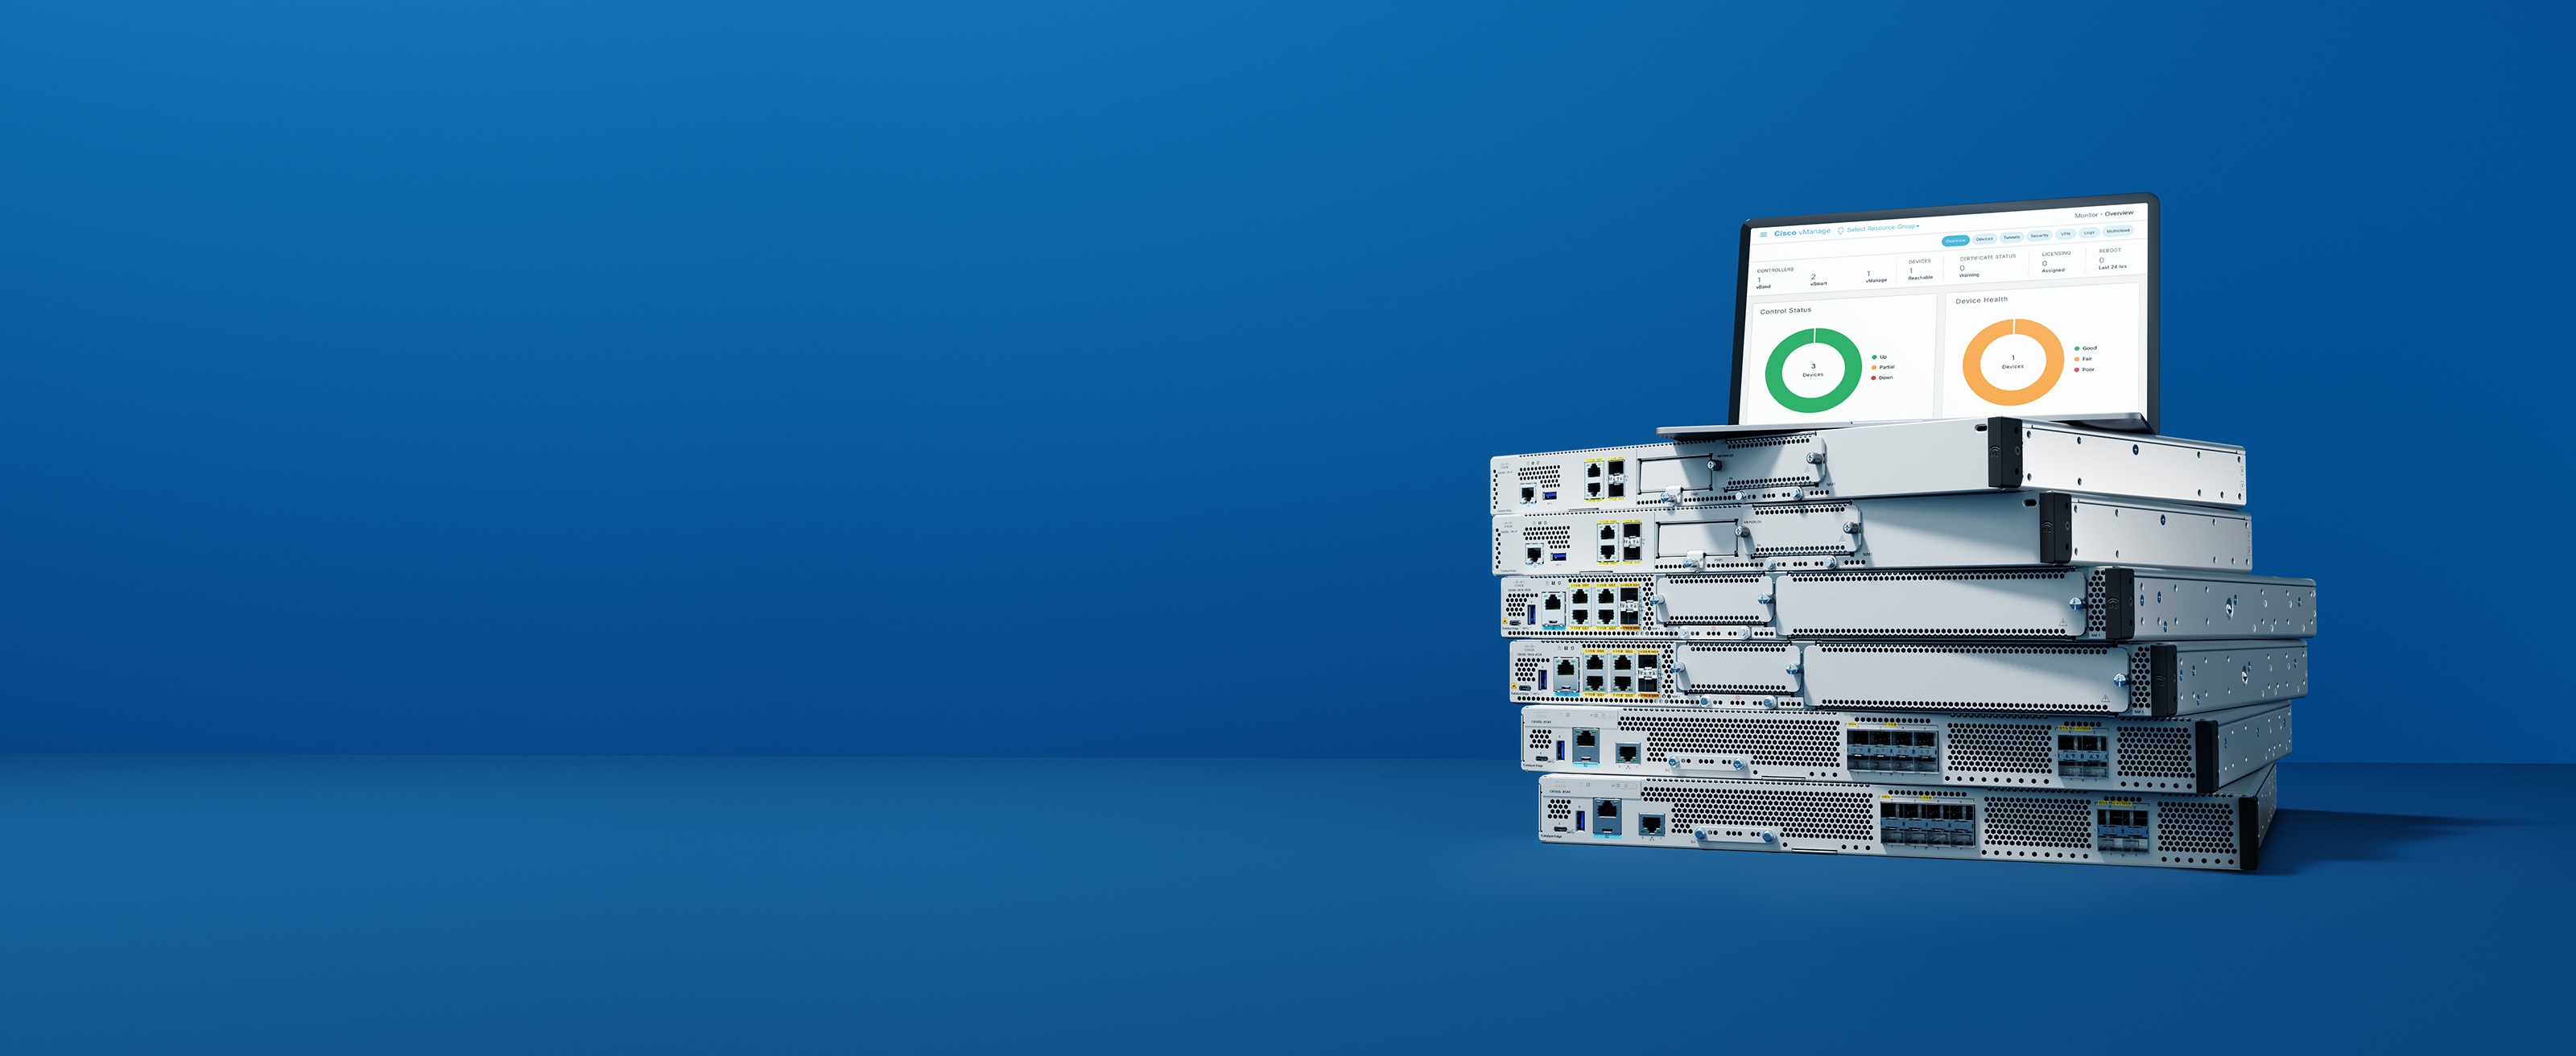 Cisco Catalyst 8000 Edge Platforms with Cisco vManage interface